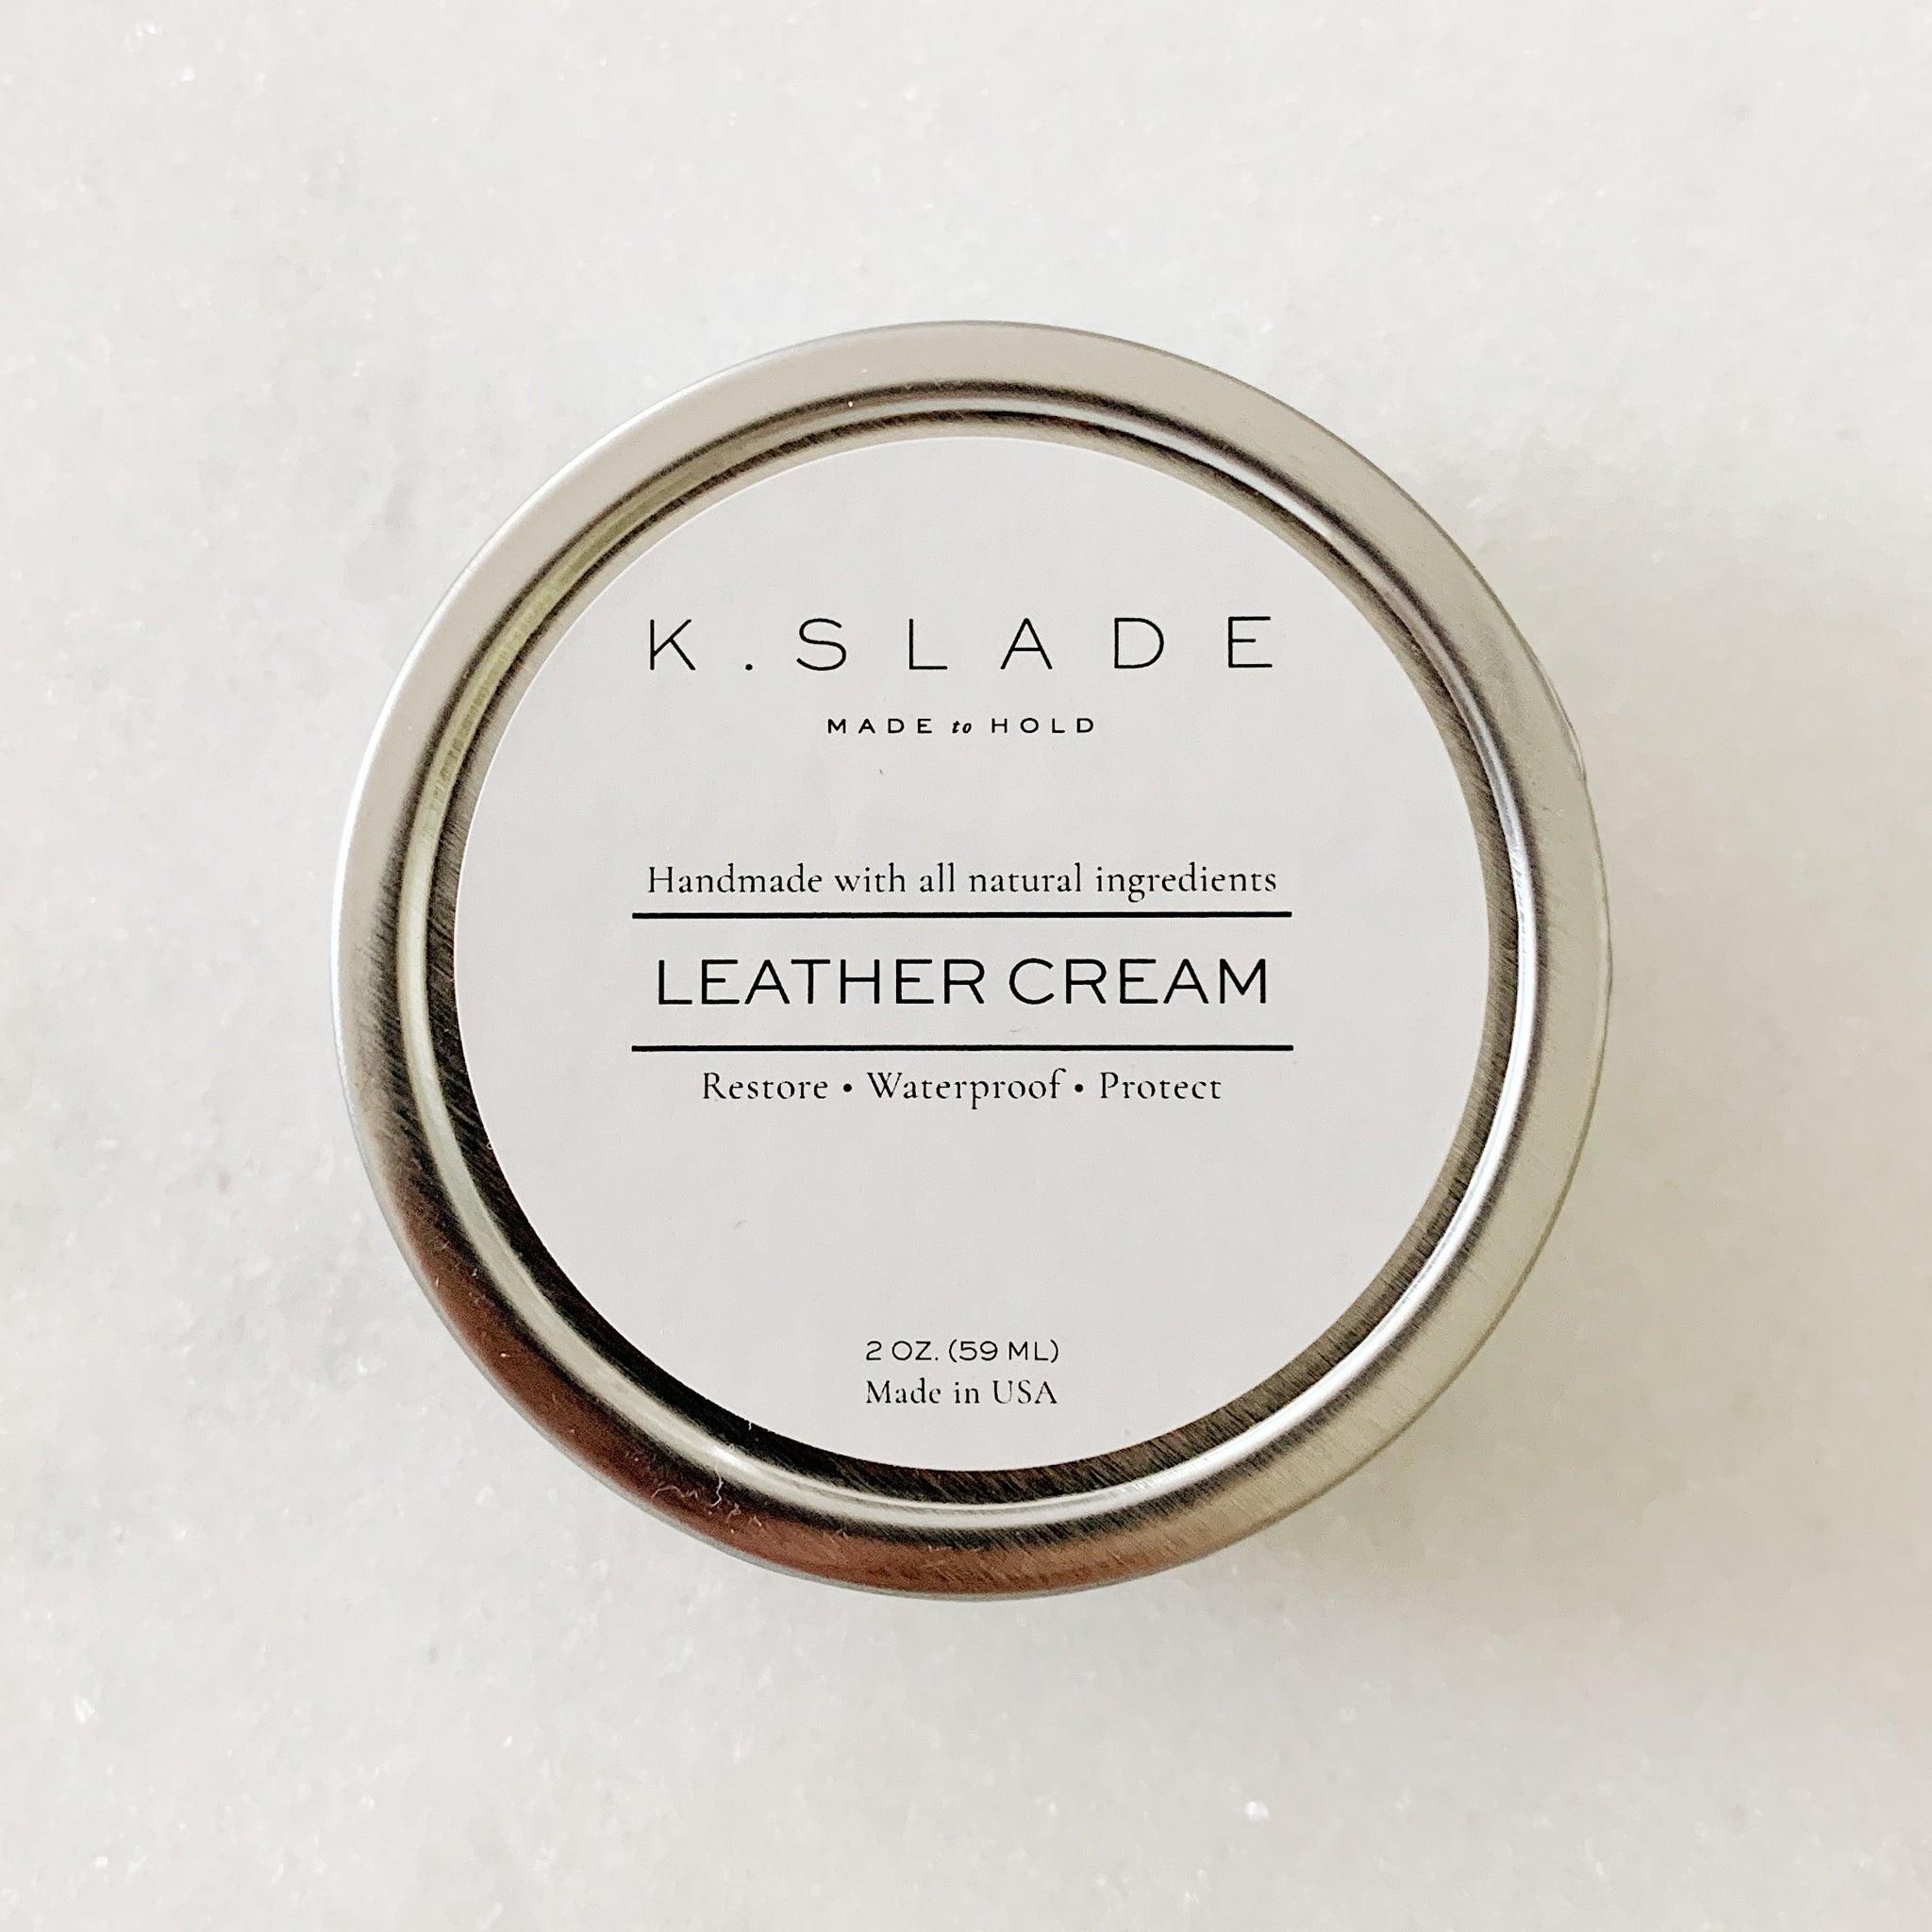 K.SLADE LEATHER CREAM - K.Slade